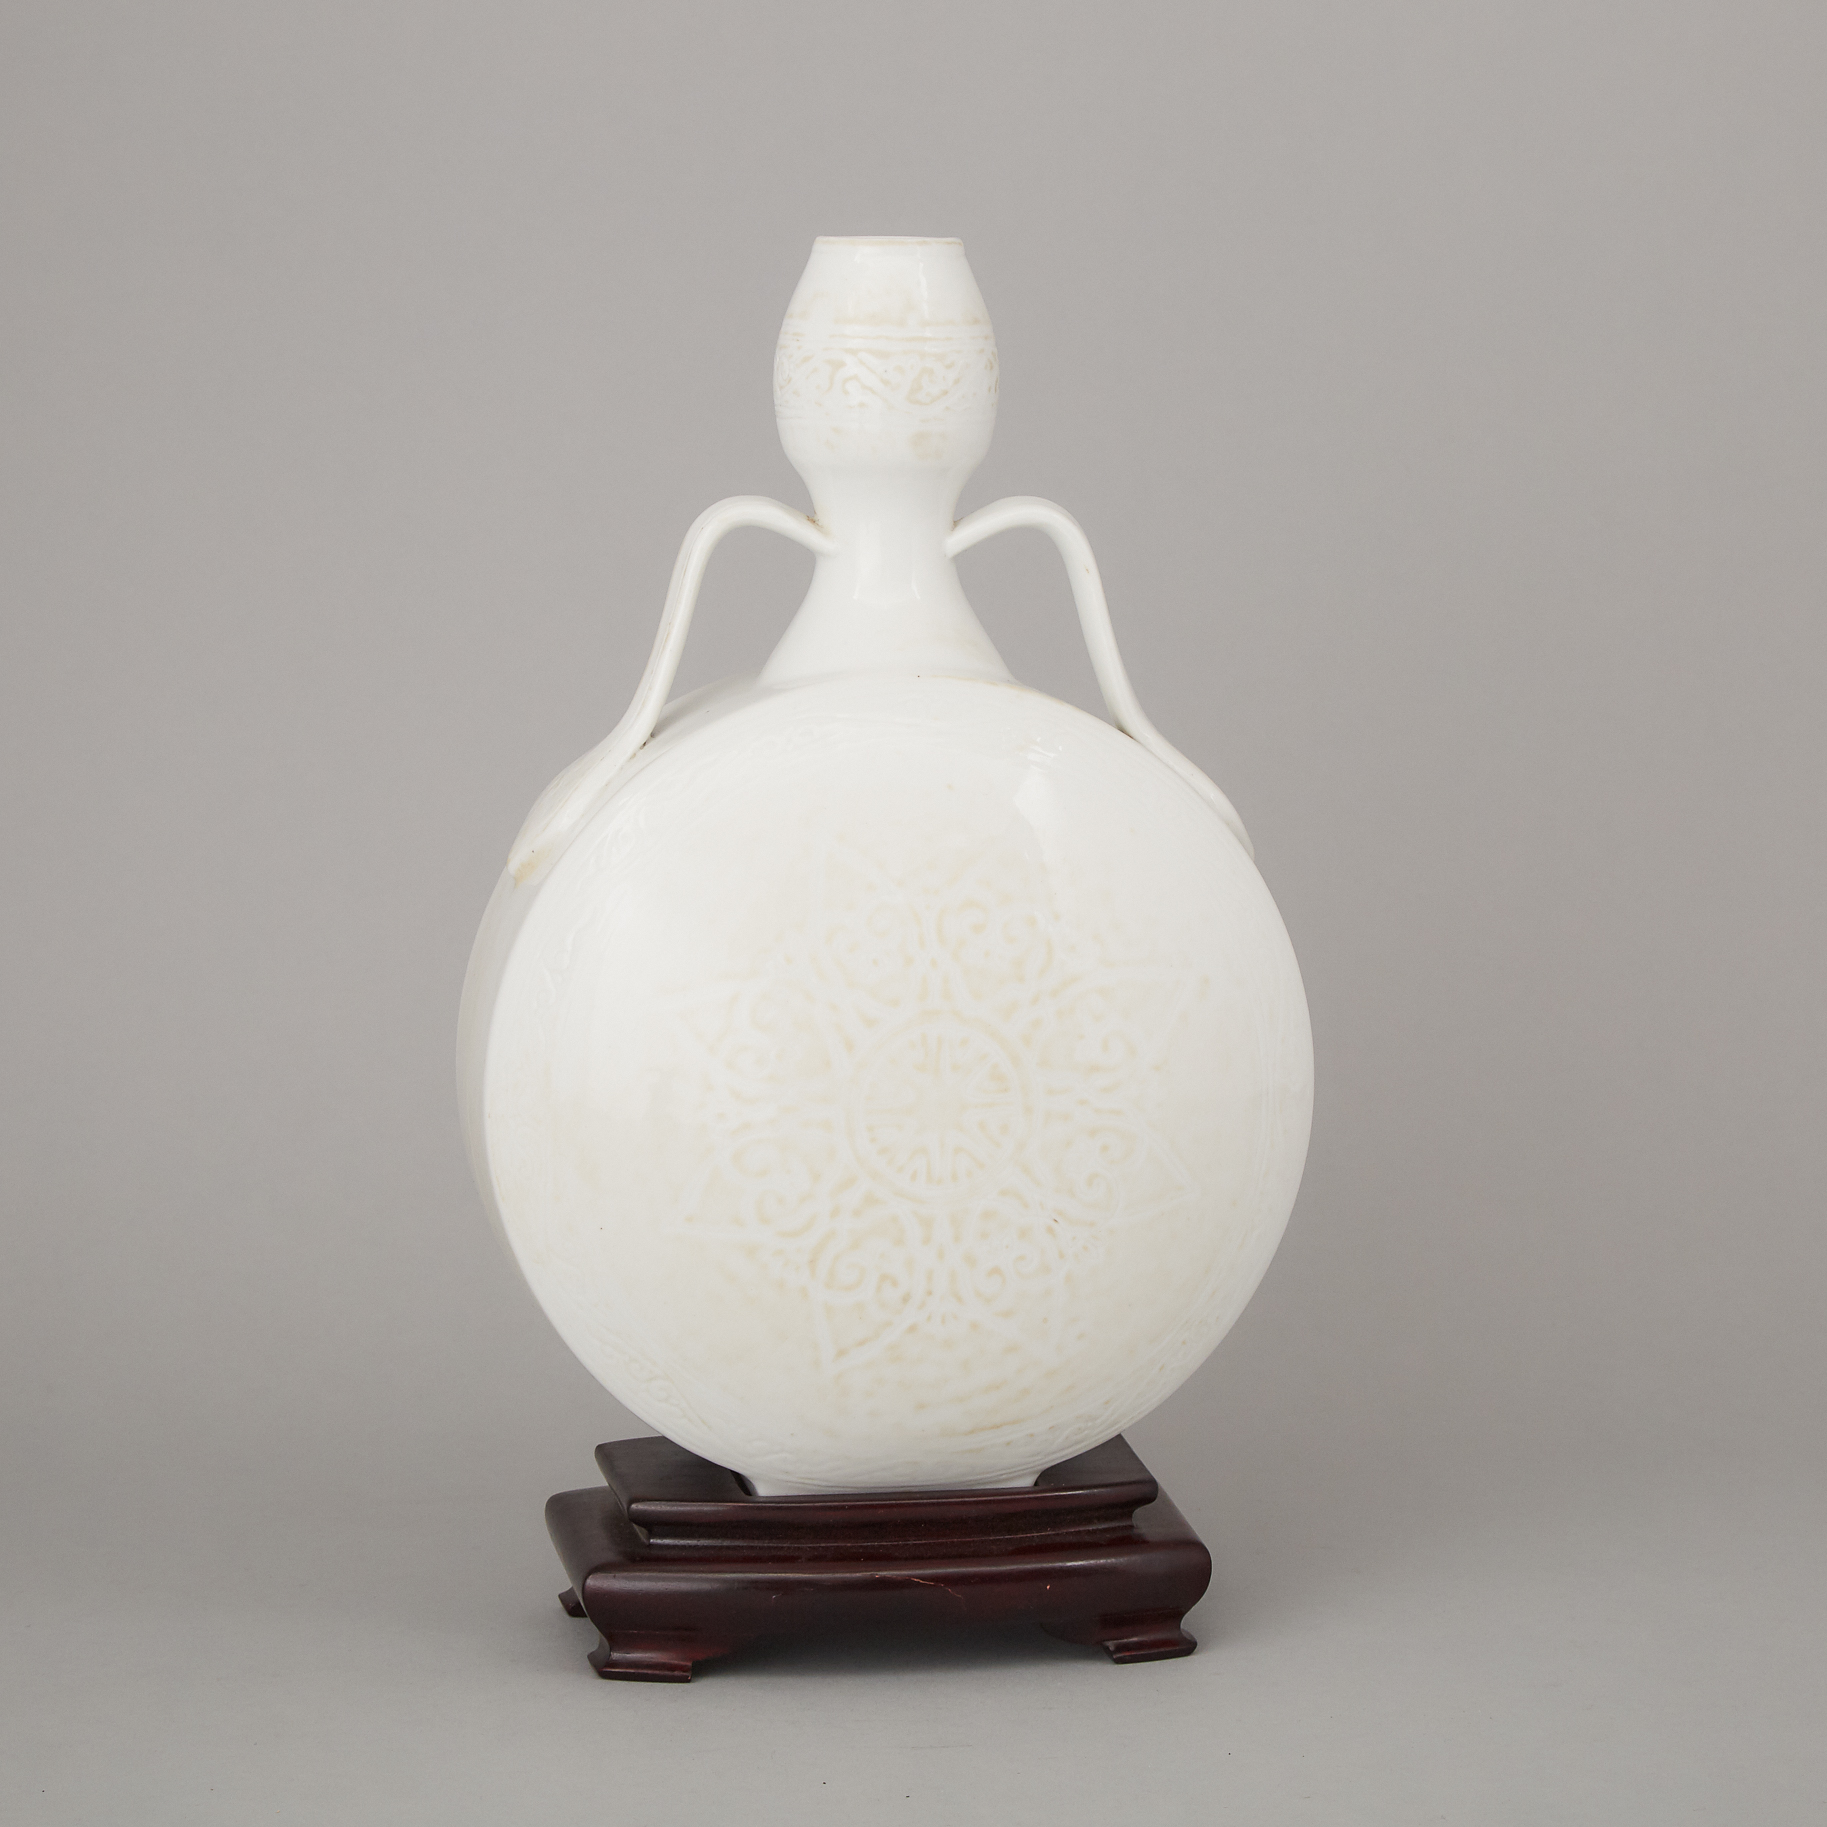 A White Glazed Porcelain Moon Flask